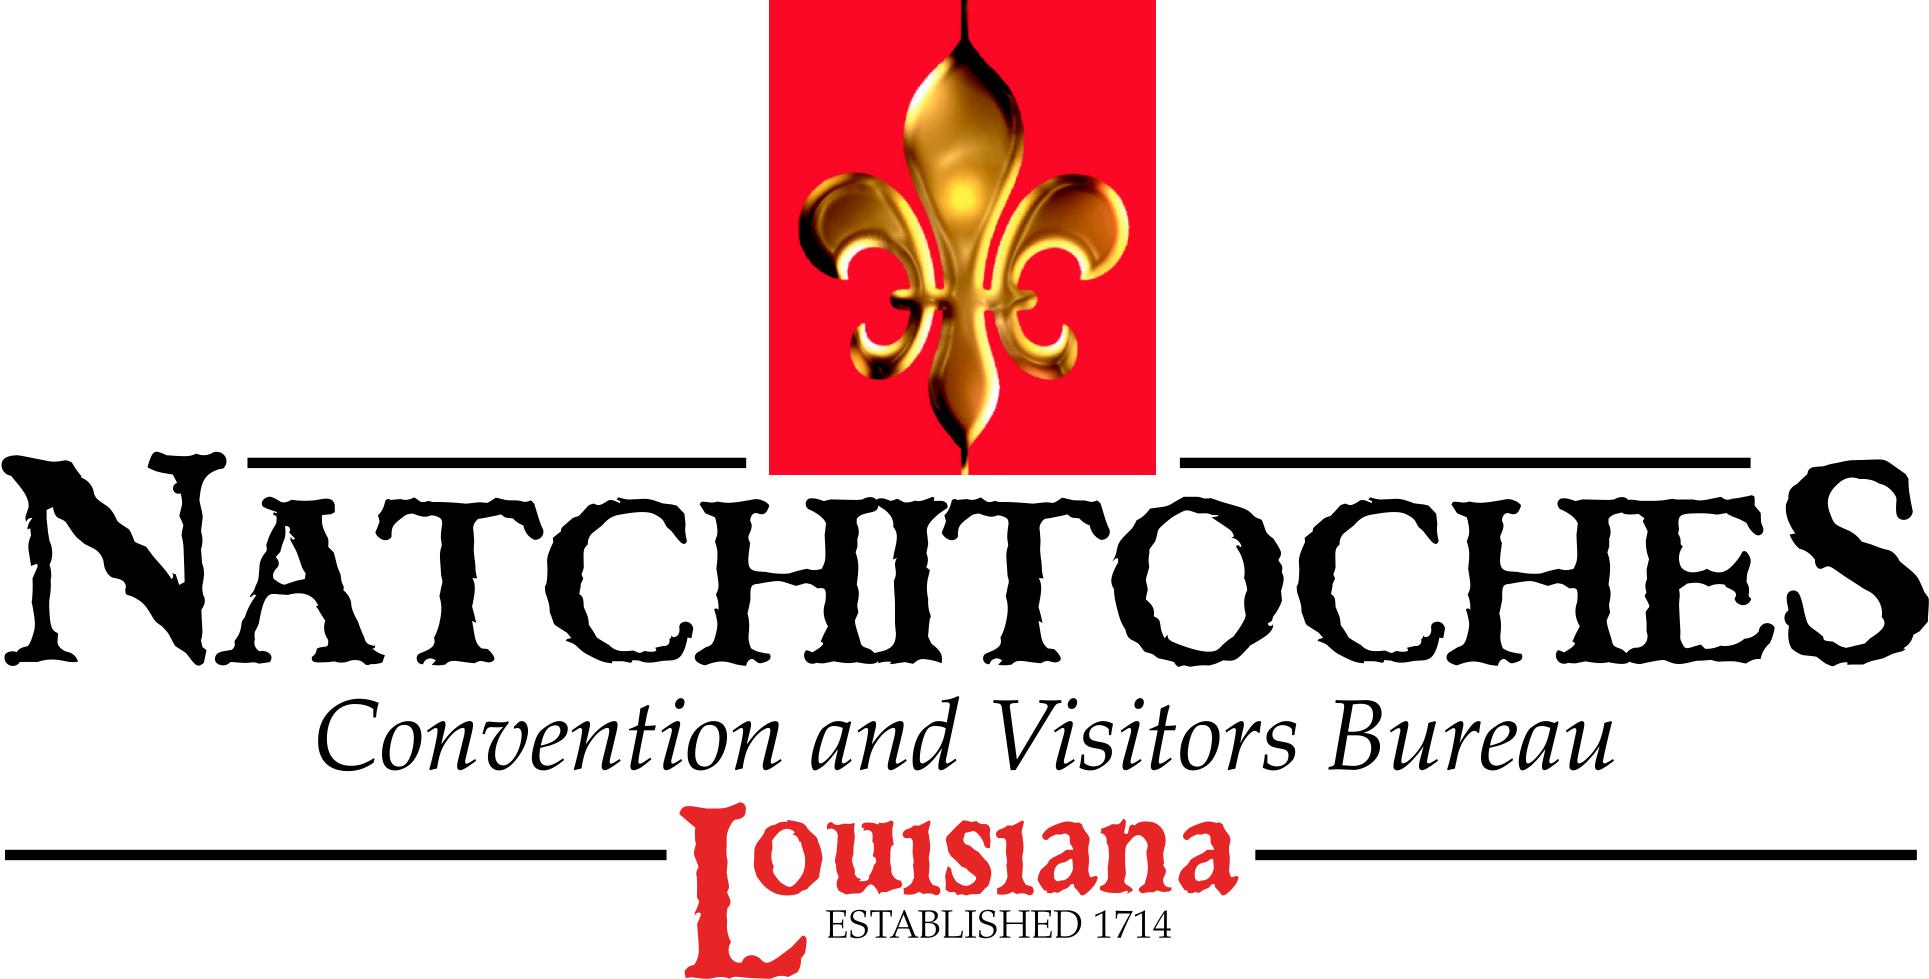 6.15 Natchitoches logo